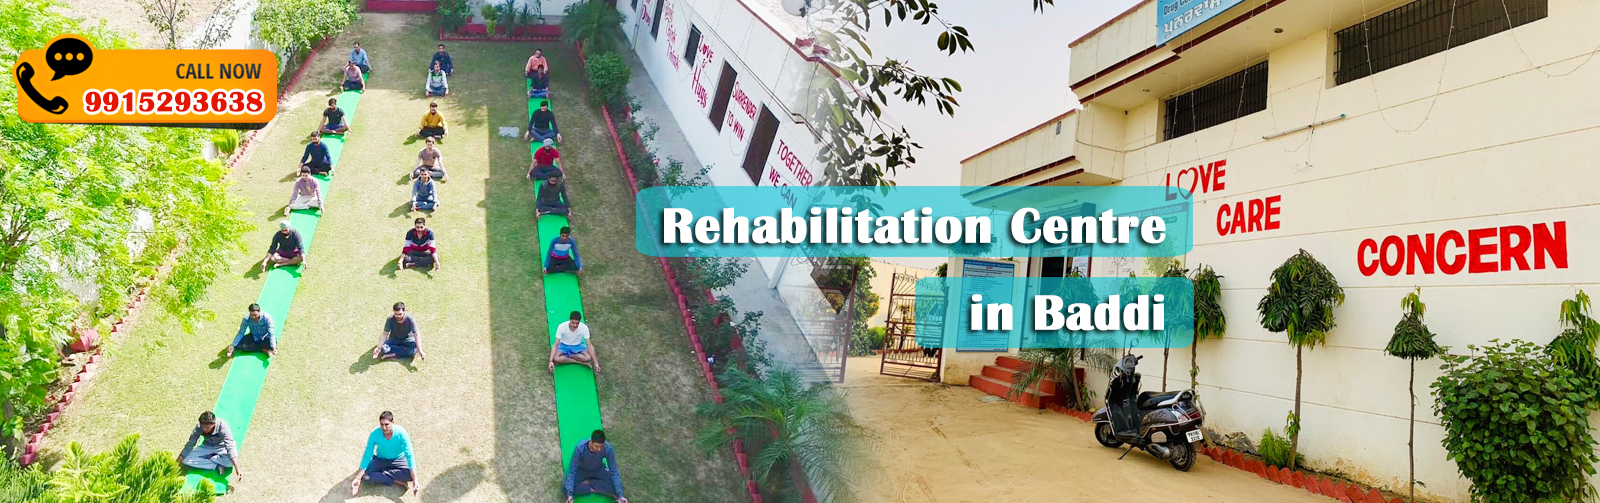 Rehabilitation Centre in Baddi